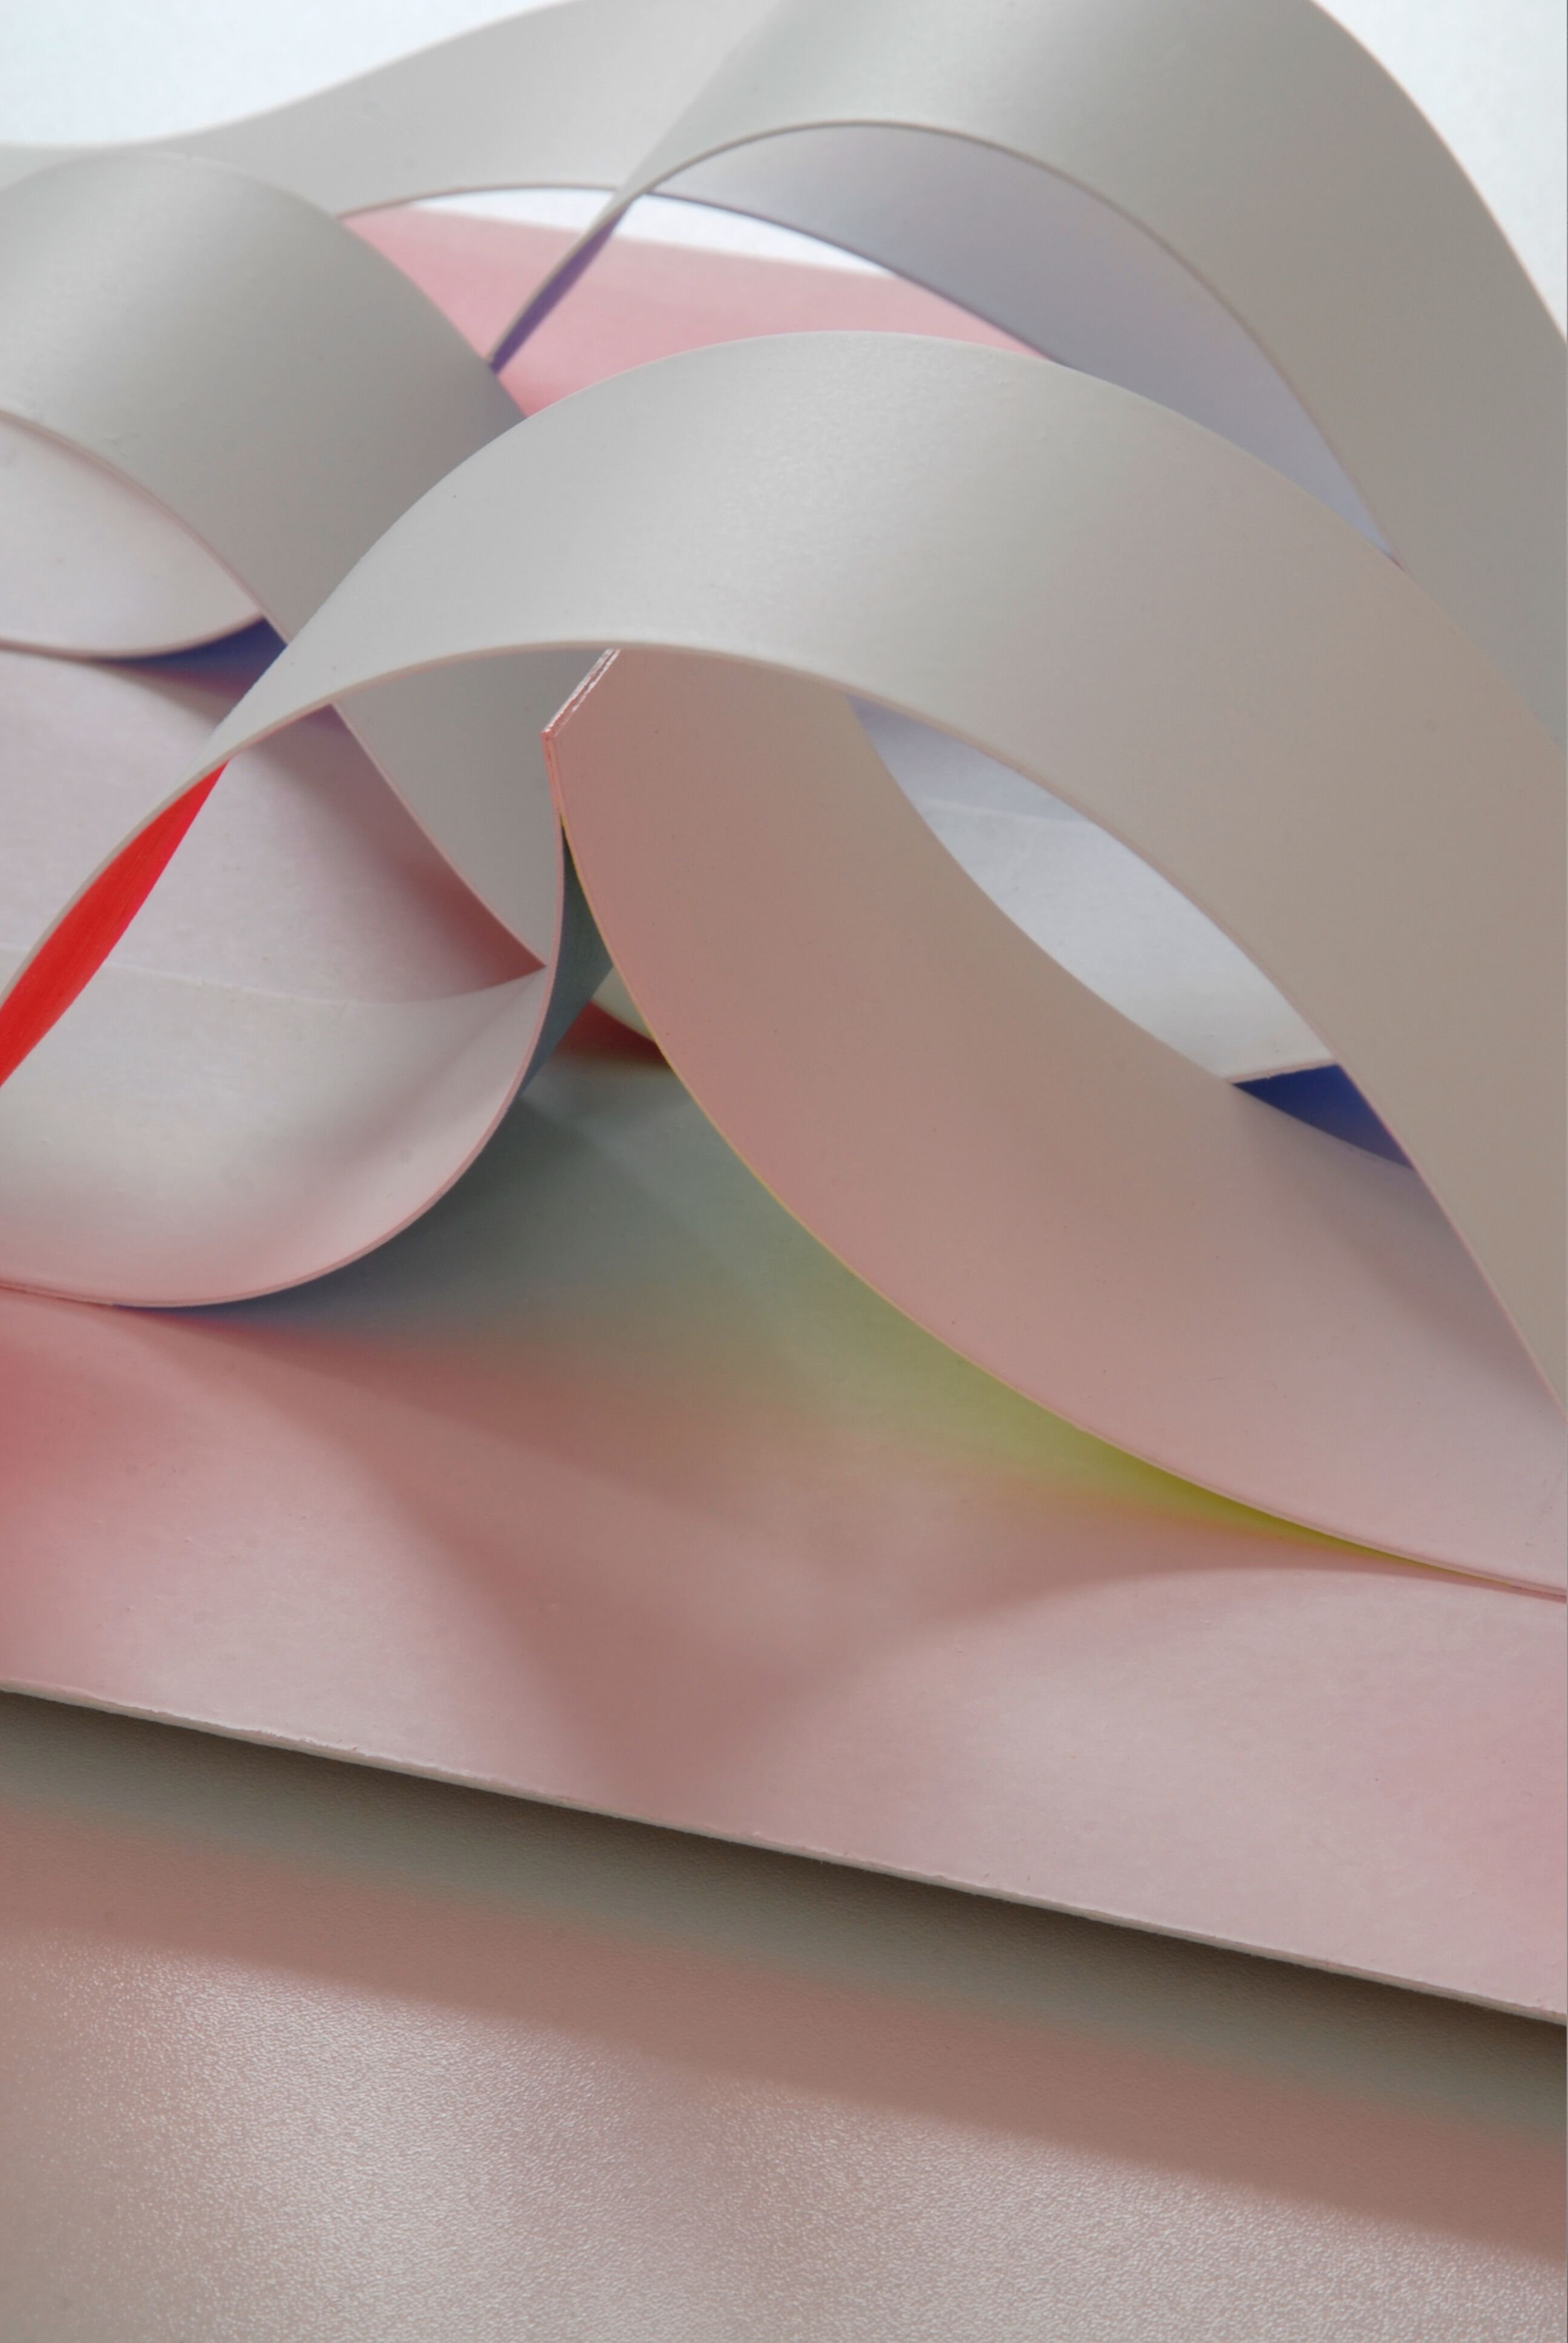 Alexander Lorenz, "FF1", wood, plastics, light, synthetic resin, 2015, 26 x 53 x 5 cm